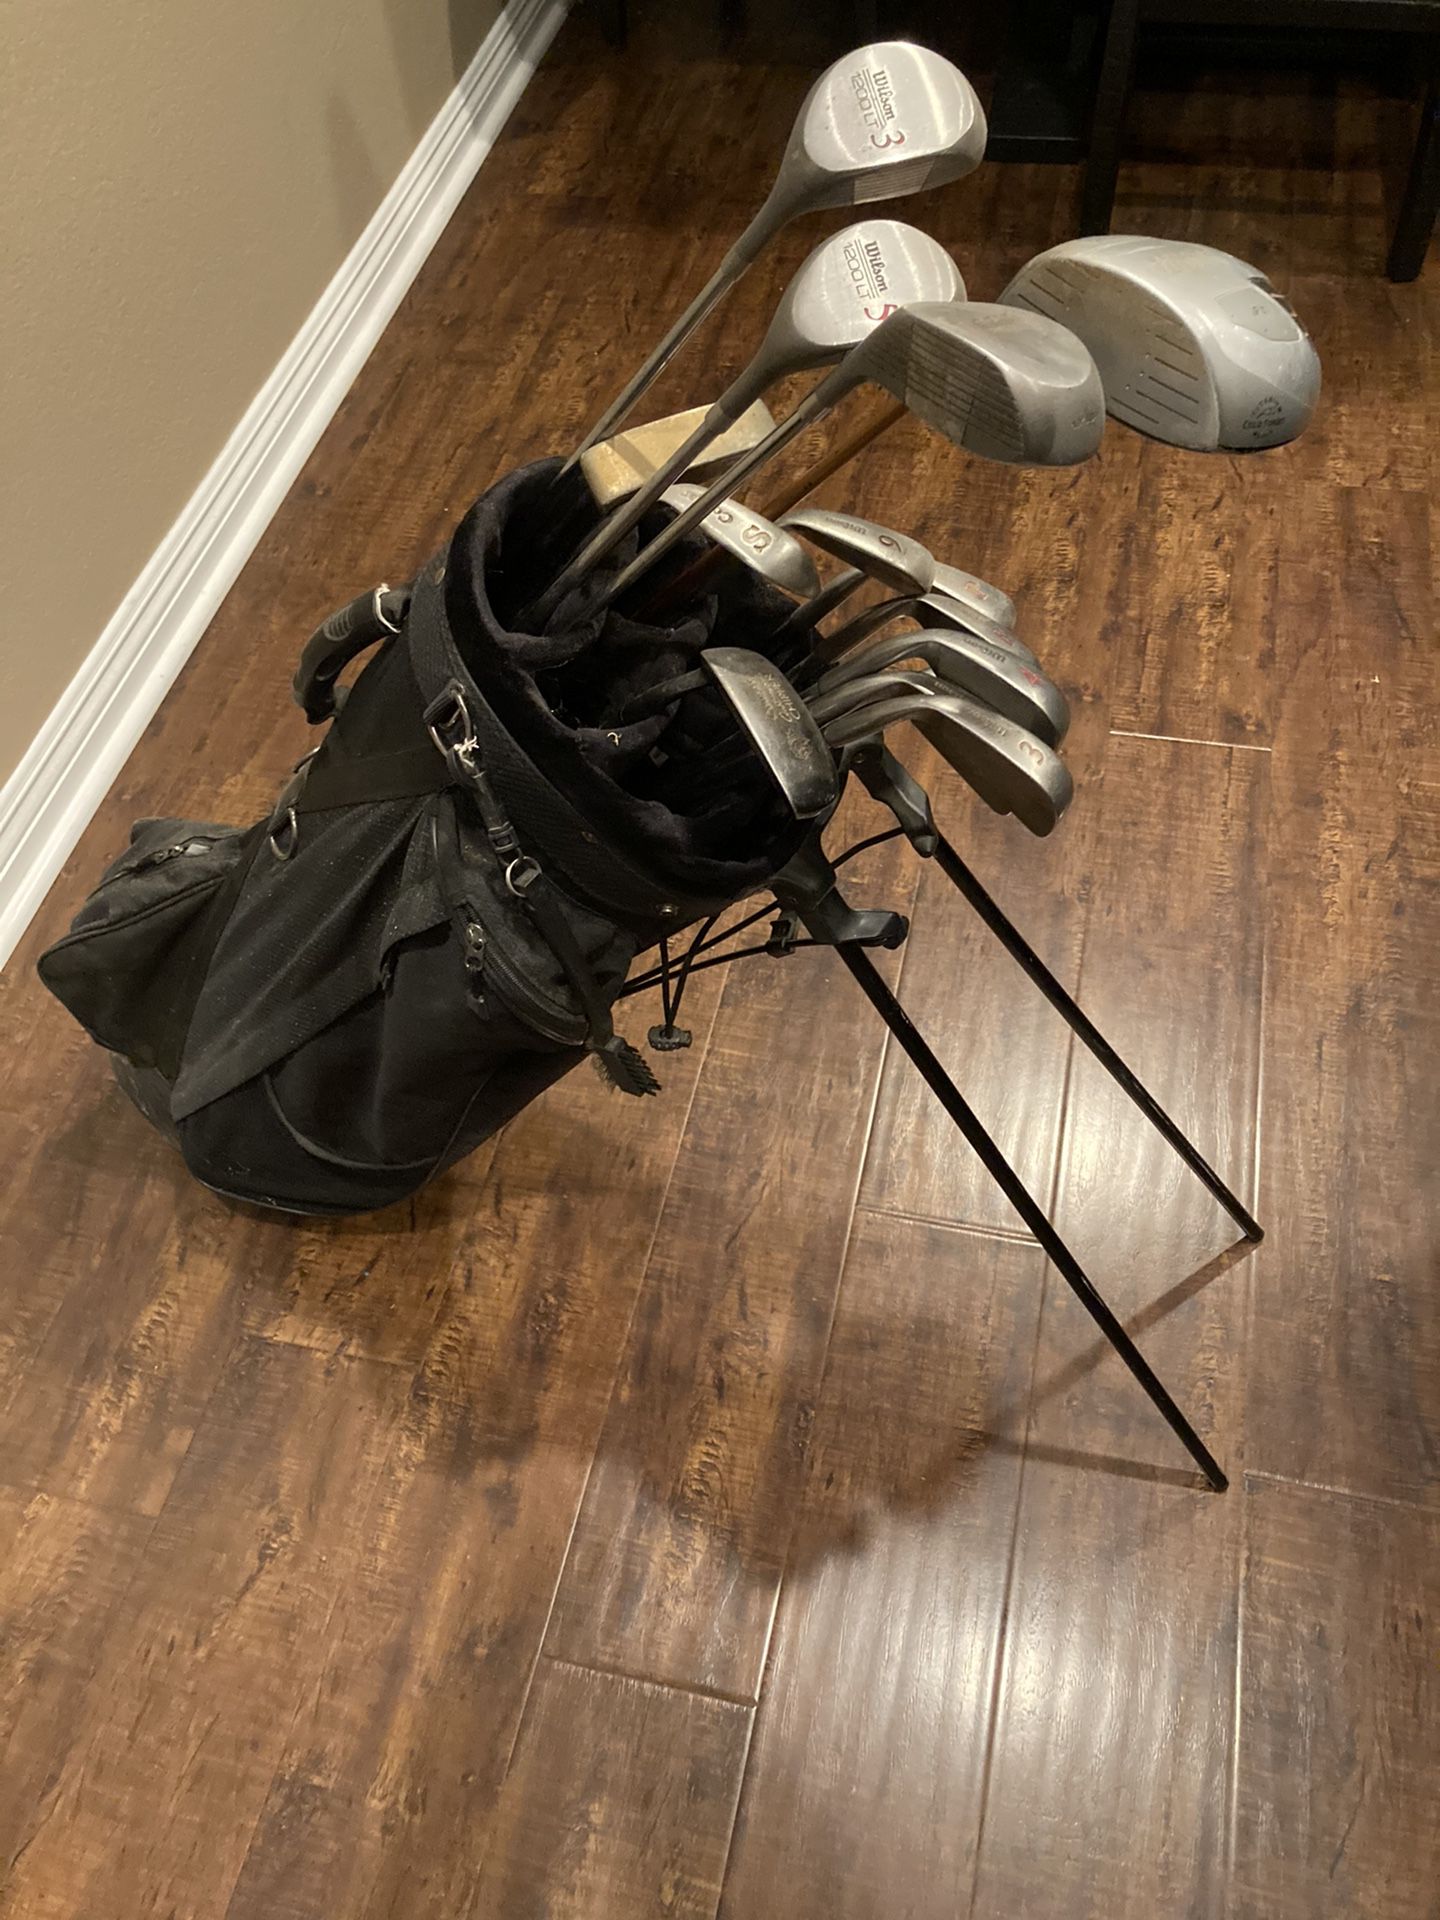 Wilson 1200LT golf club set and bag